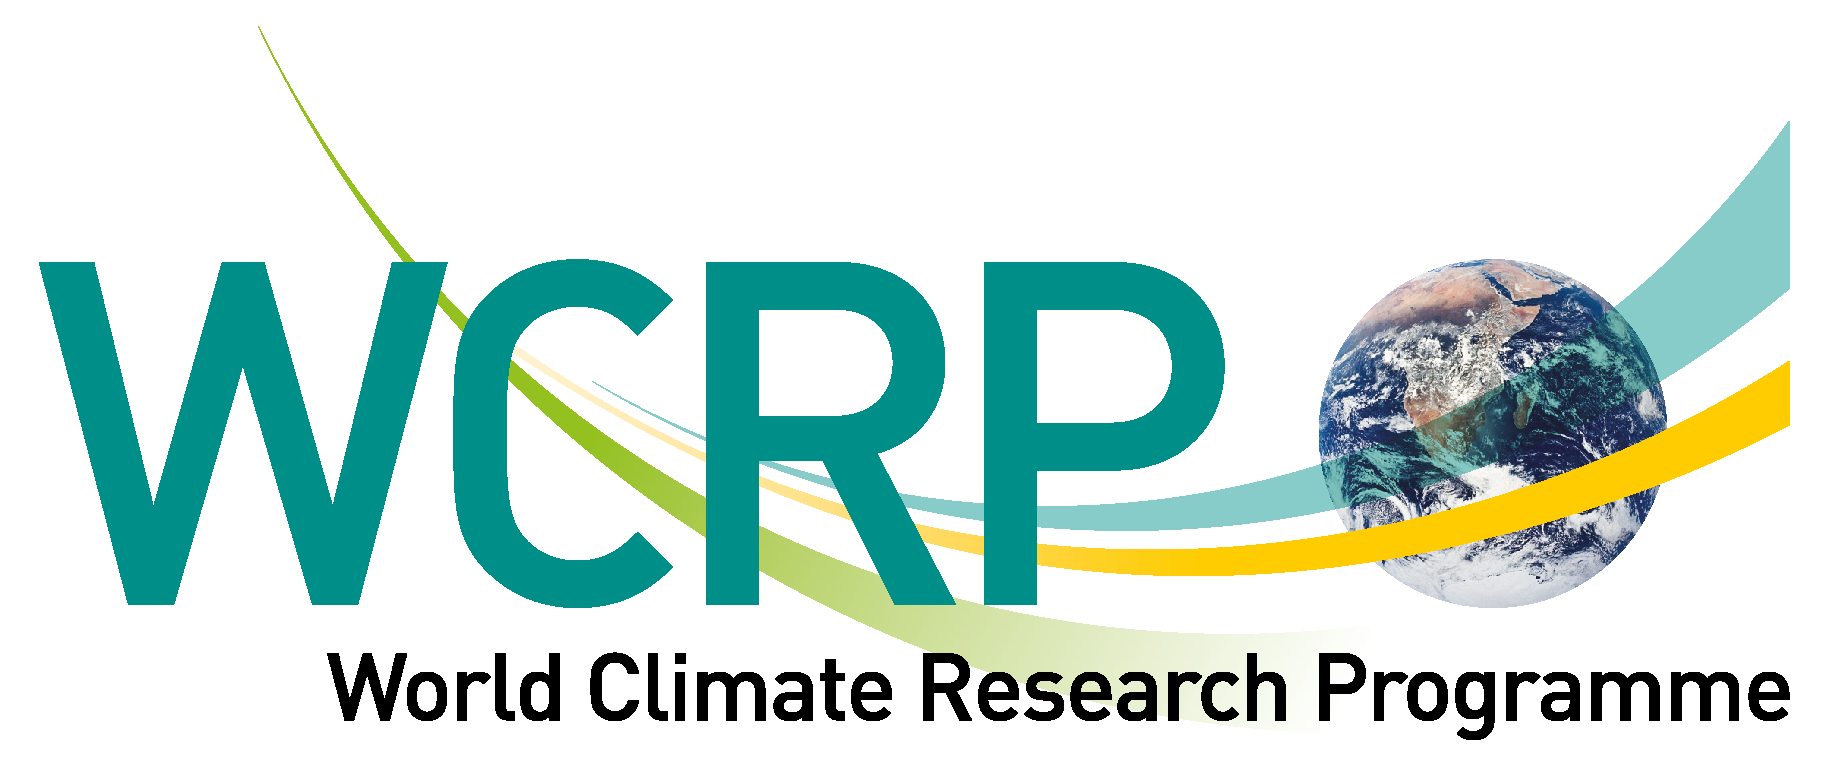 WCRP logo for white background